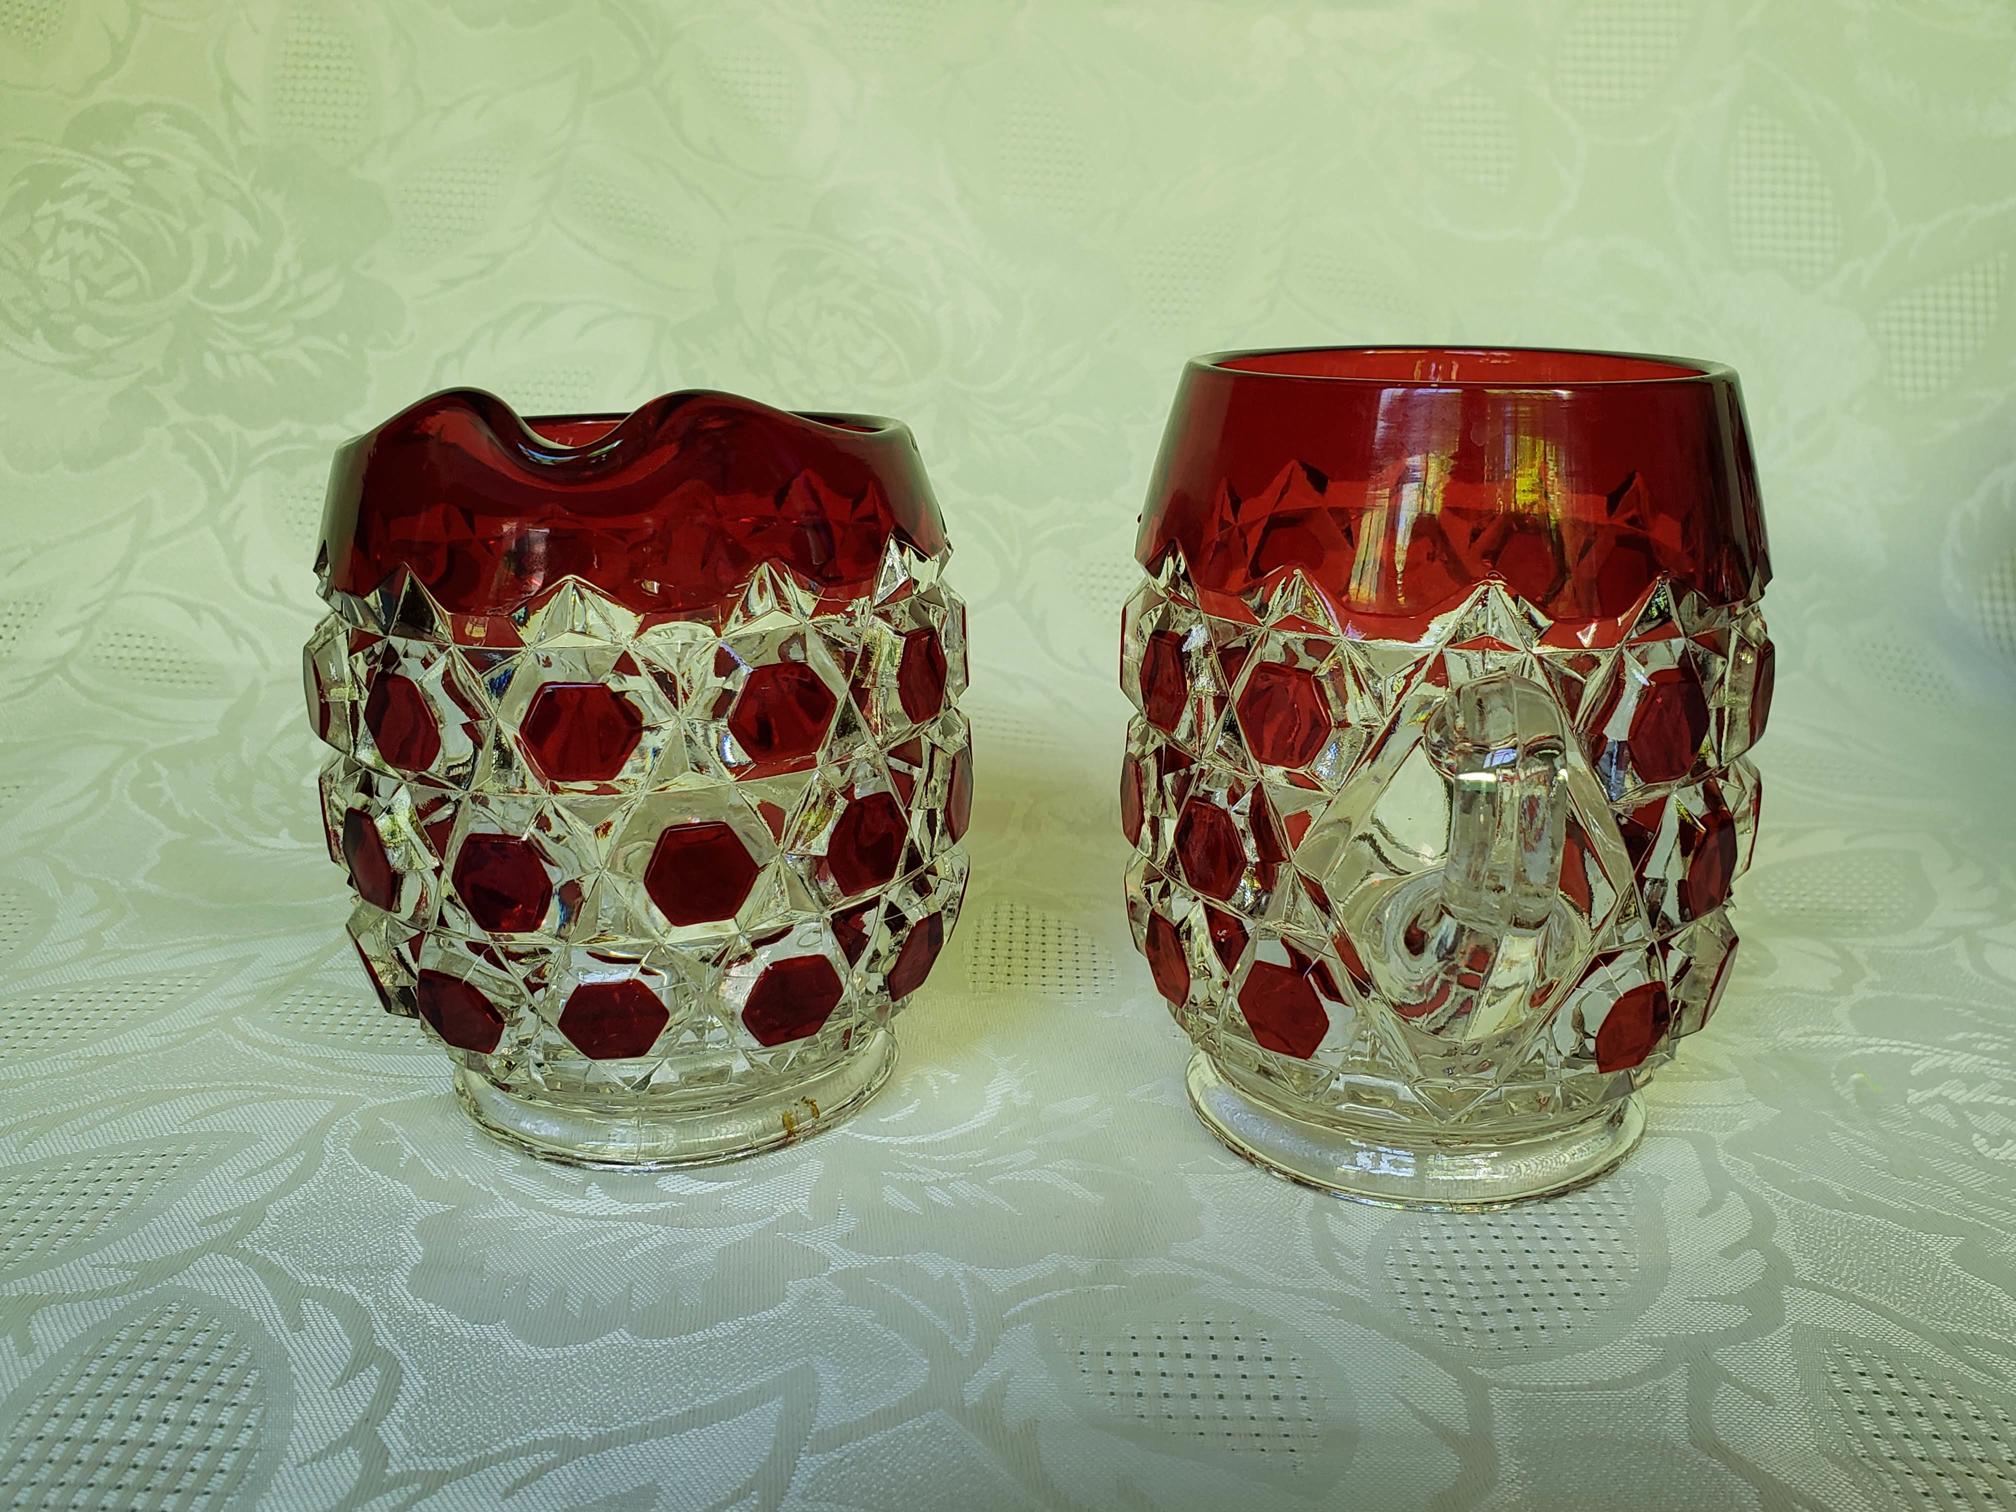 https://serstyle.com/wp-content/uploads/2019/05/Vintage-Czech-Bohemian-Style-Cut-to-Clear-Cranberry-Glass-Set-3.jpg